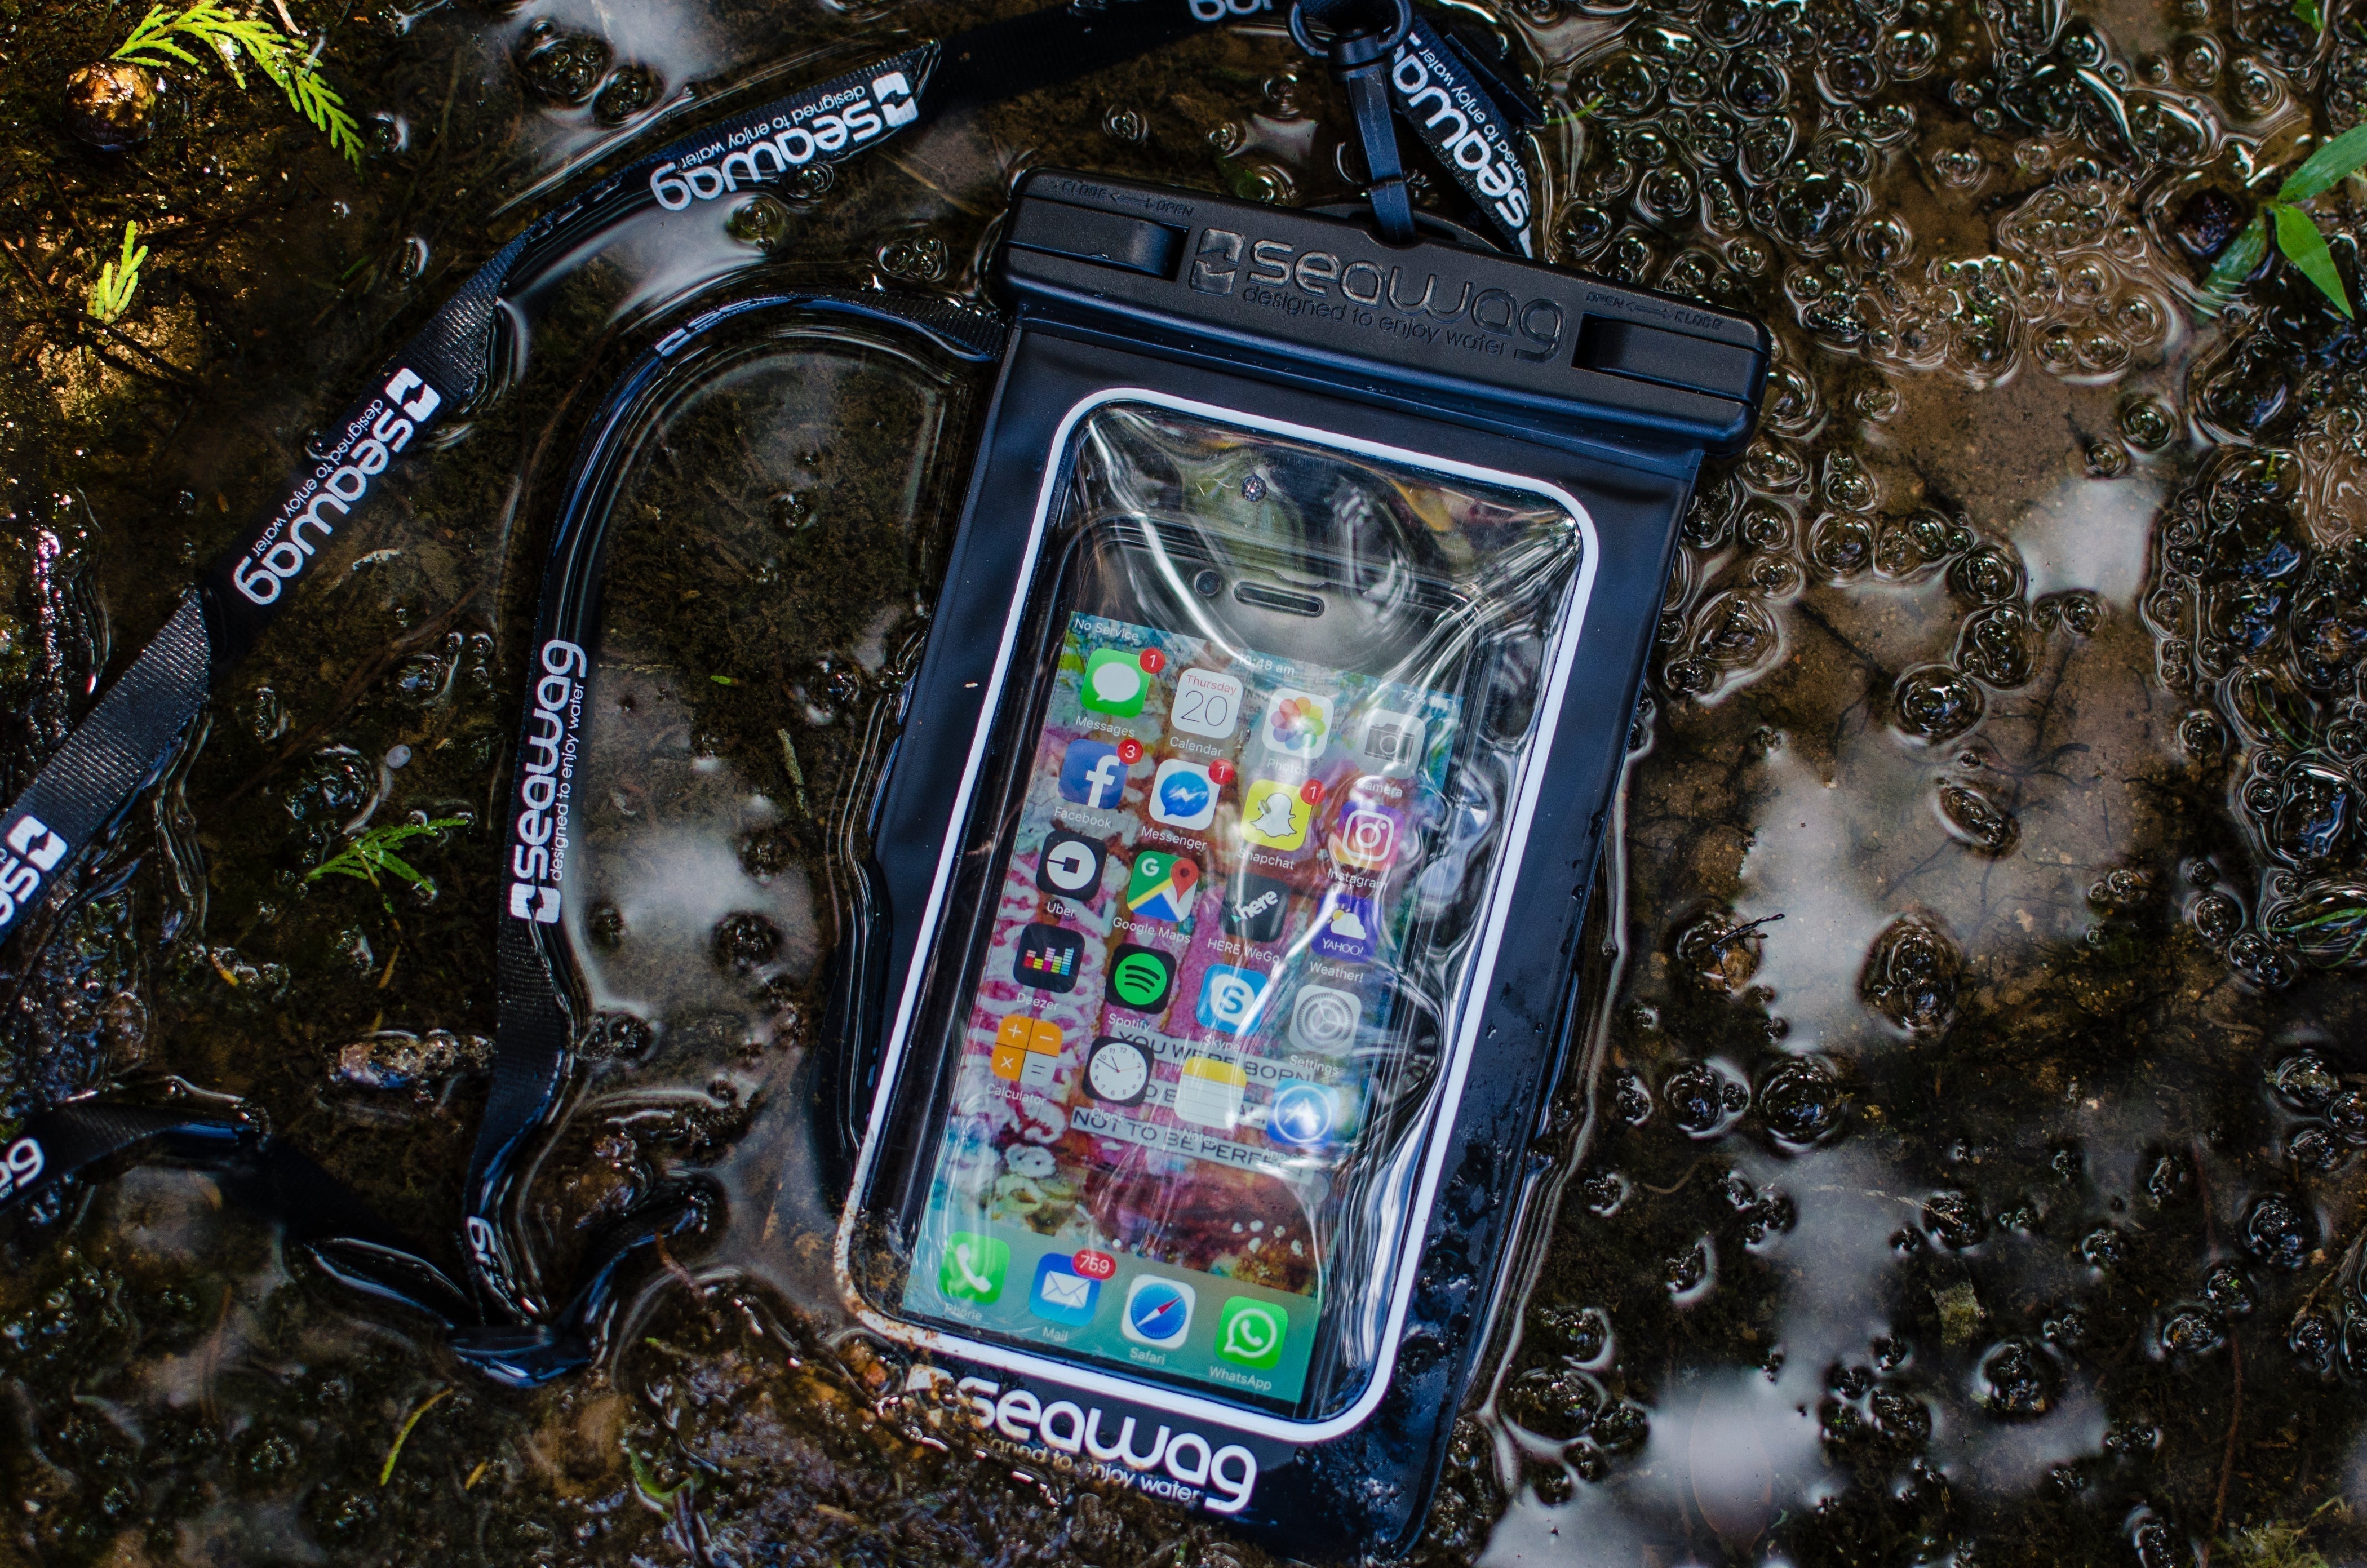 Universal Waterproof Case For Smartphone - White/Purple